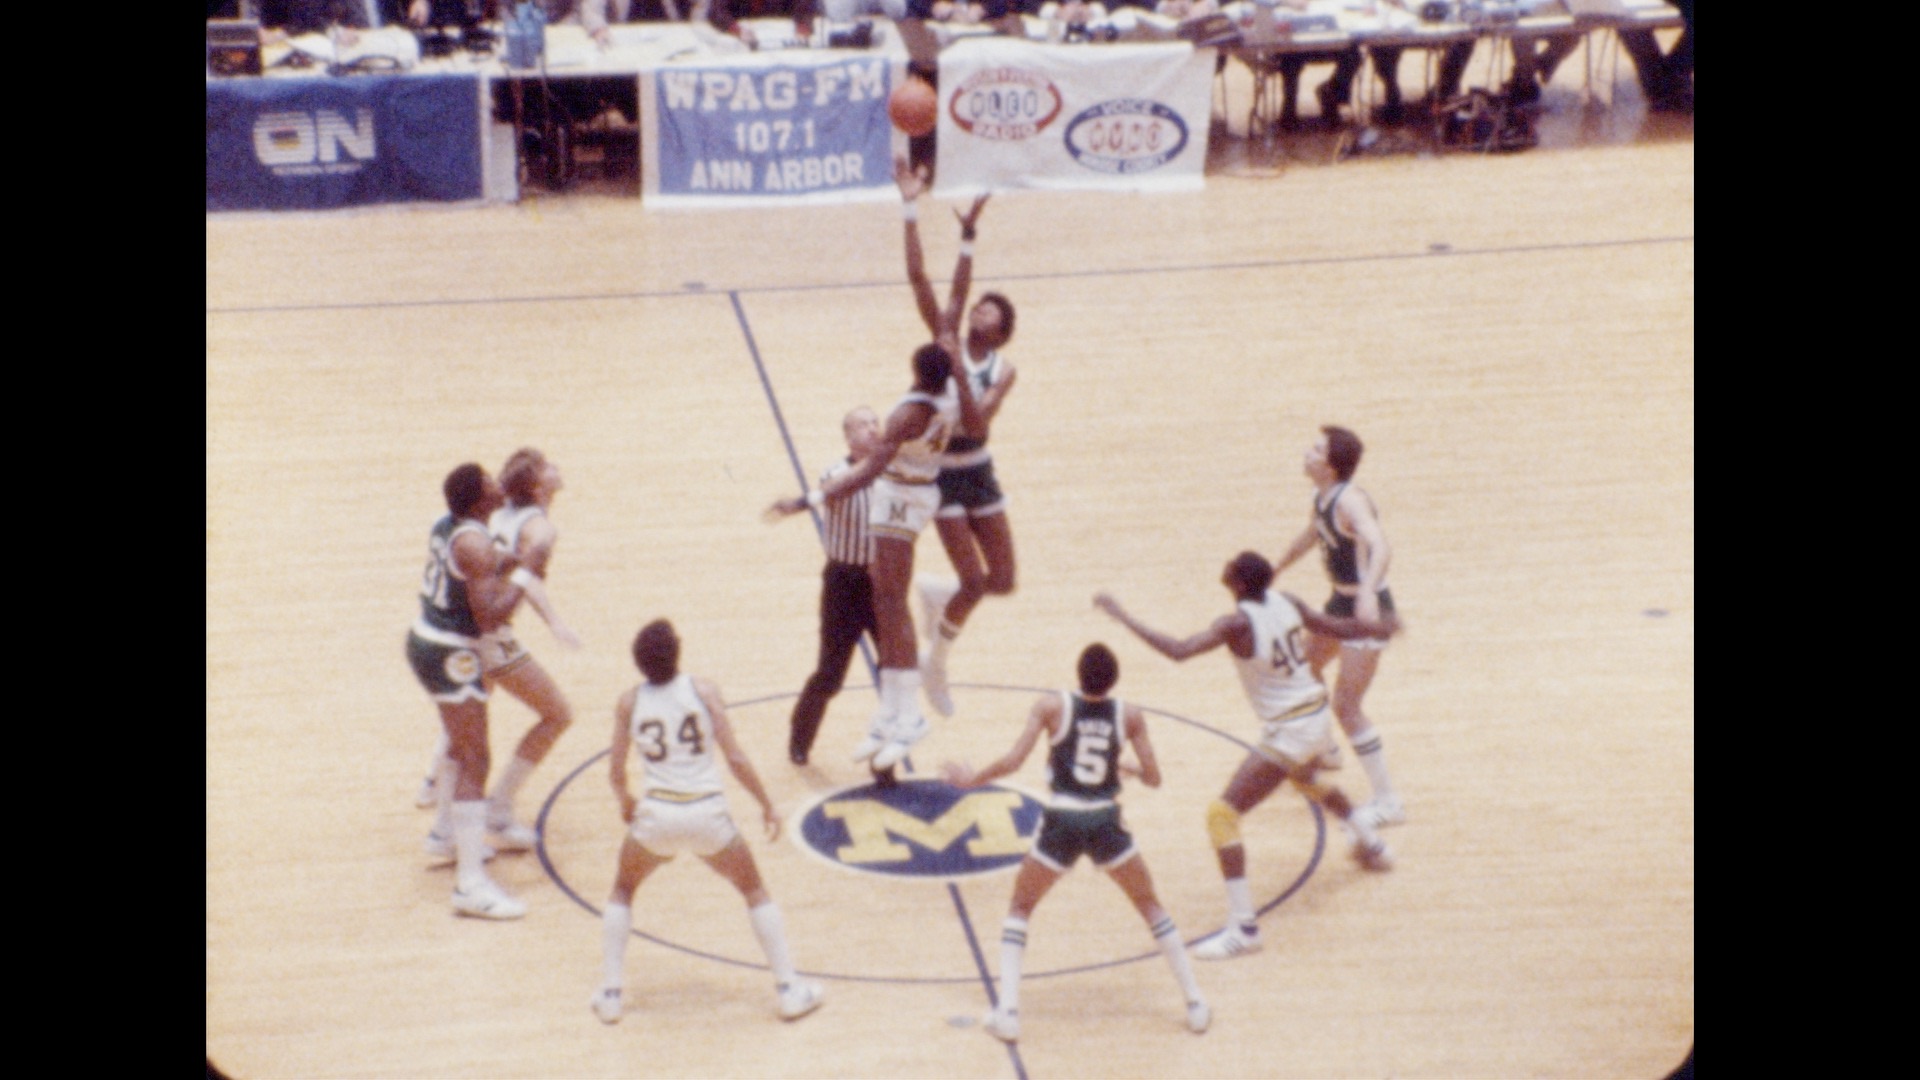 MSU Basketball vs. Michigan (away), 1980